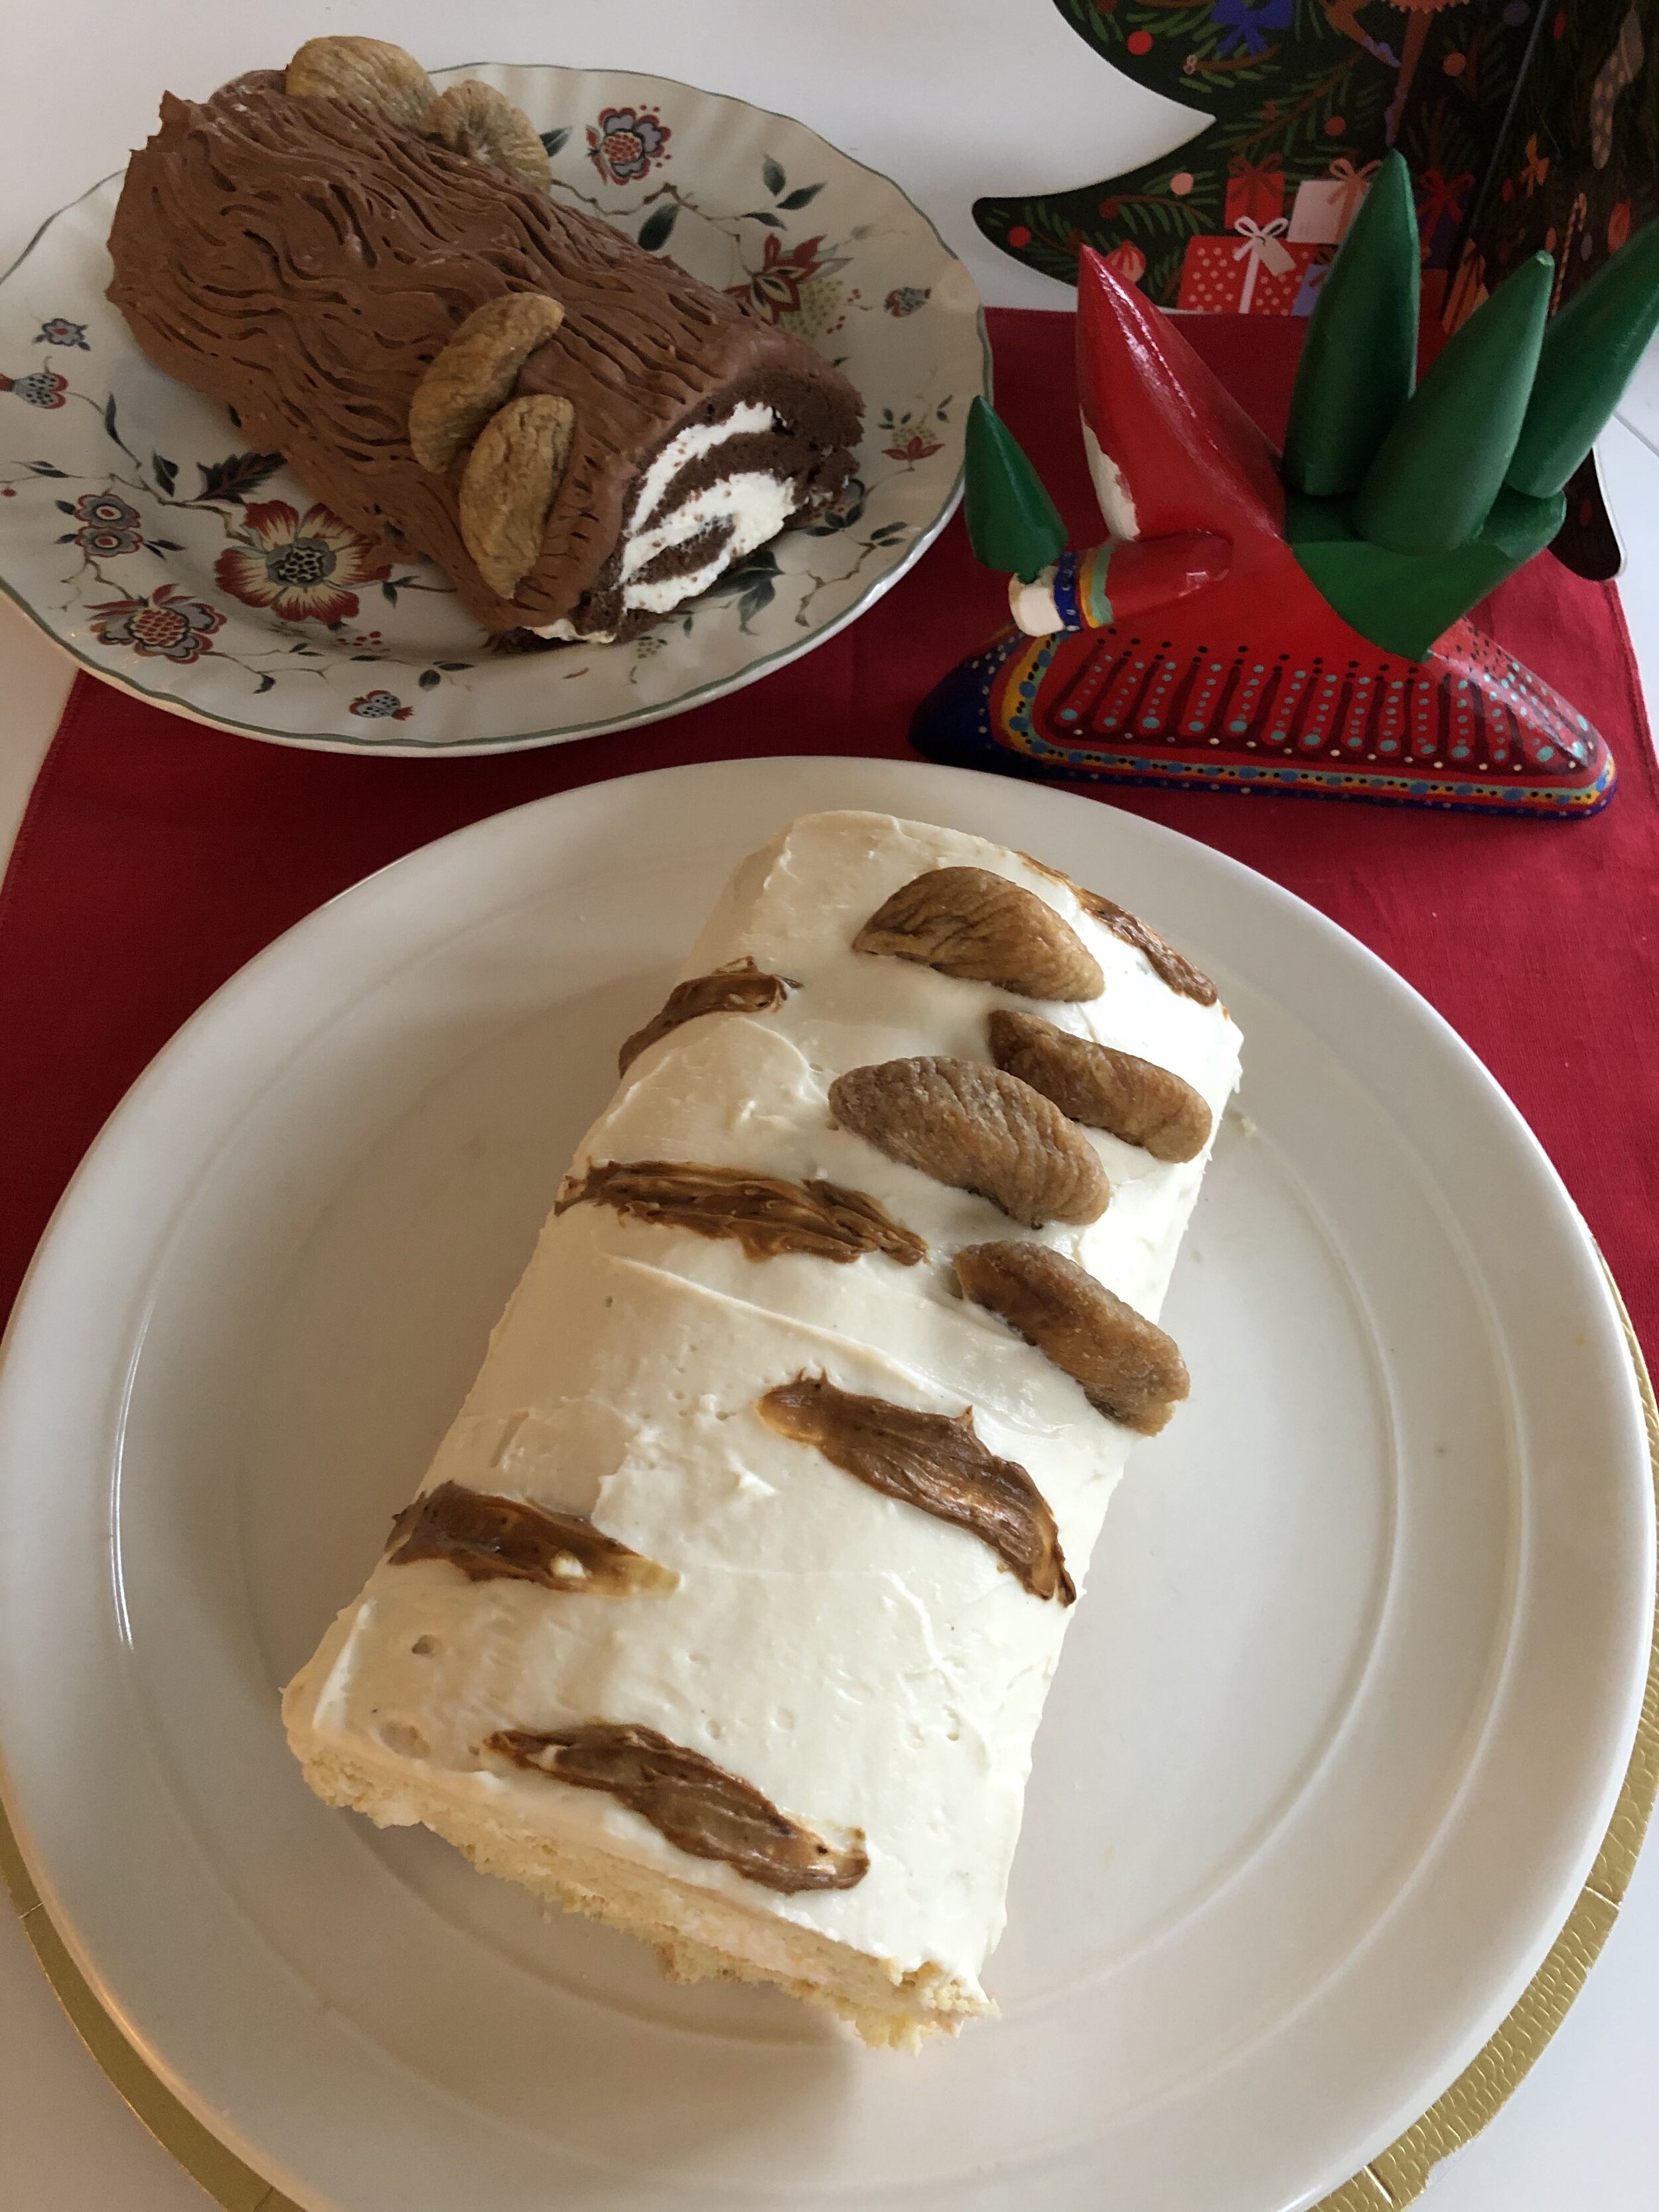 Bûche de Noël (Yule Log Cake) - The Flavor Bender